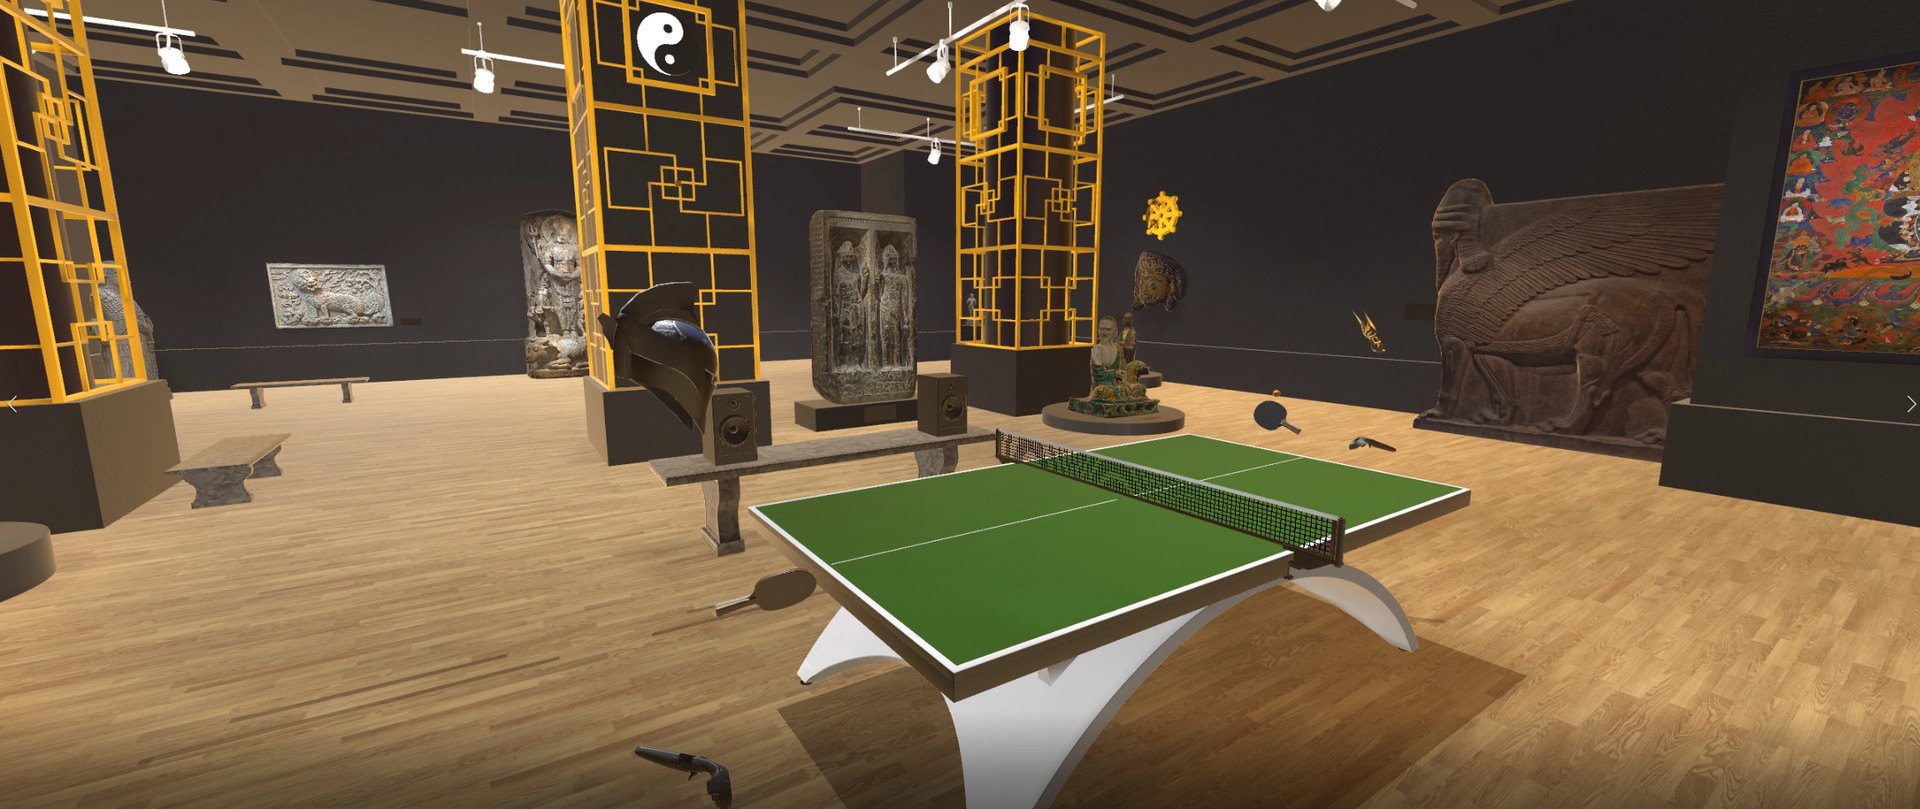 Eleven: Table Tennis VR Steam CD Key